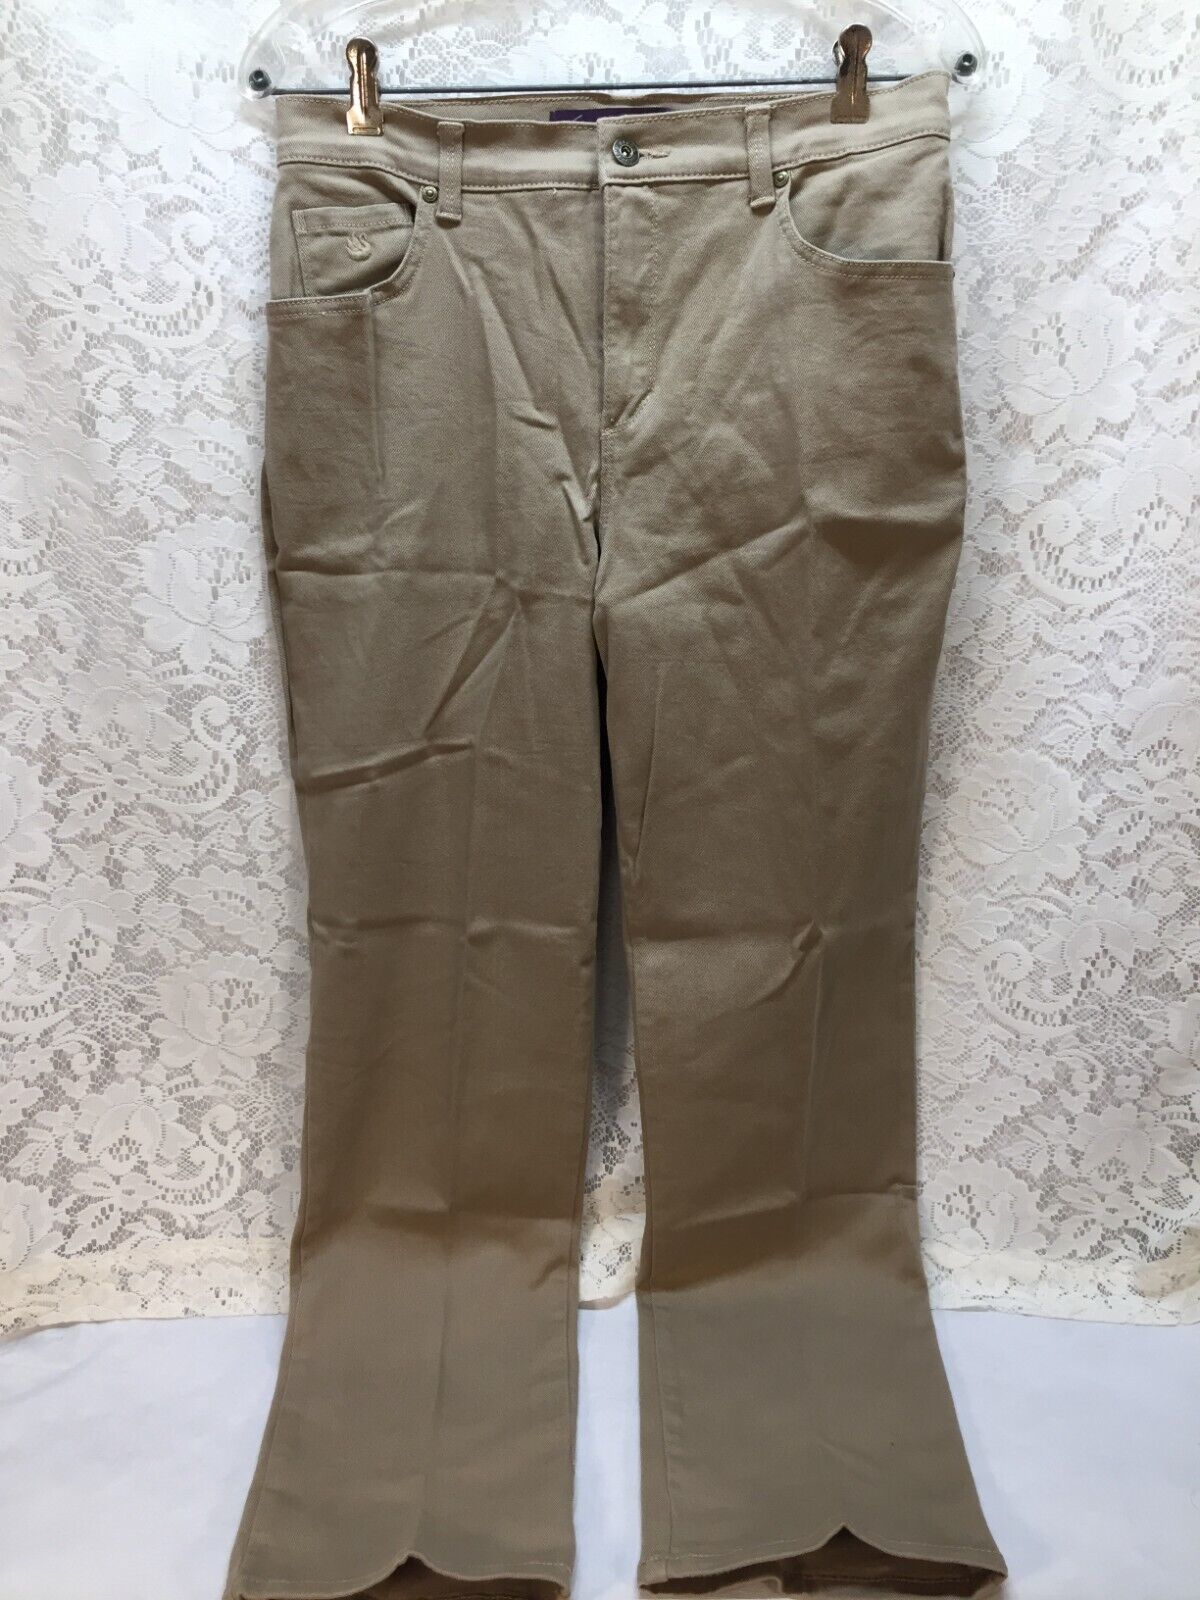 Primary image for Women's Gloria Vanderbilt Size 6 Brown Amanda Jeans Pants